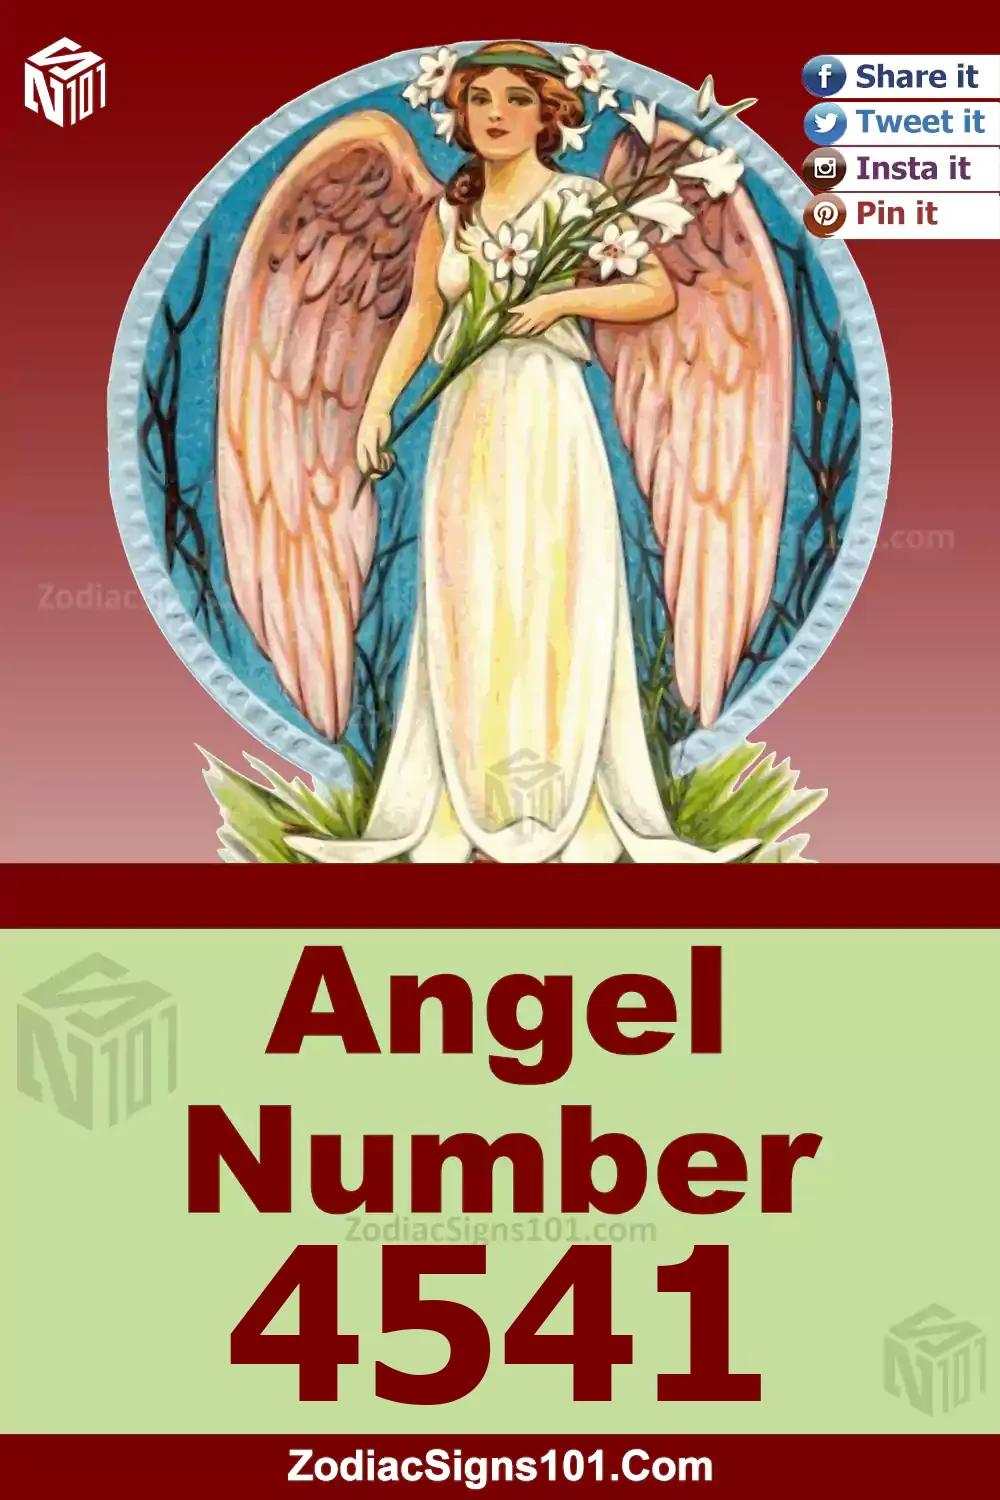 4541-Angel-Number-Meaning.jpg